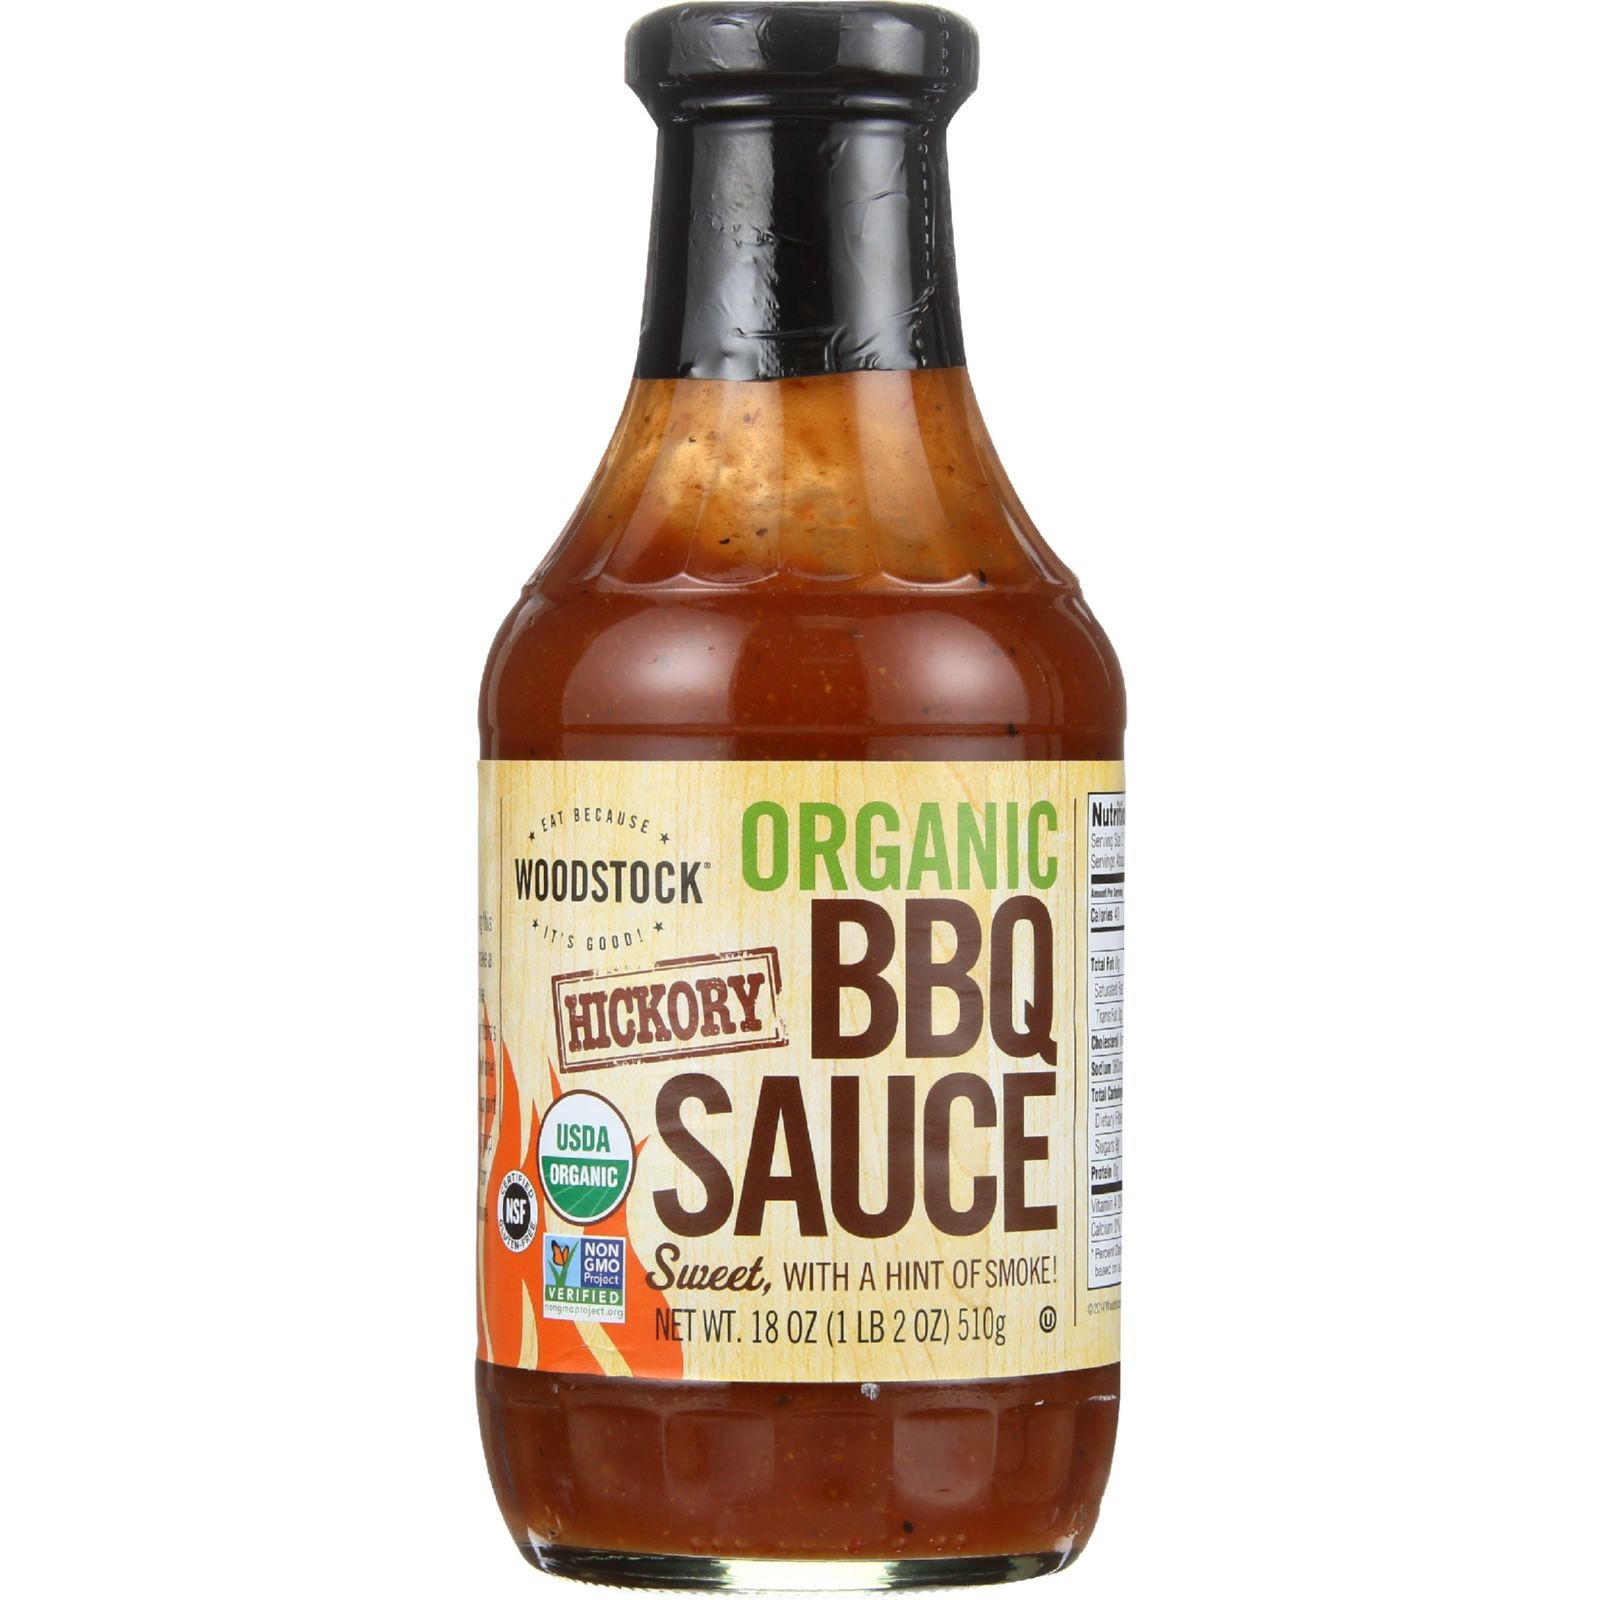 Organic Bbq Sauce Best Of Woodstock organic Bbq Sauce Hickory 18 Oz Walmart